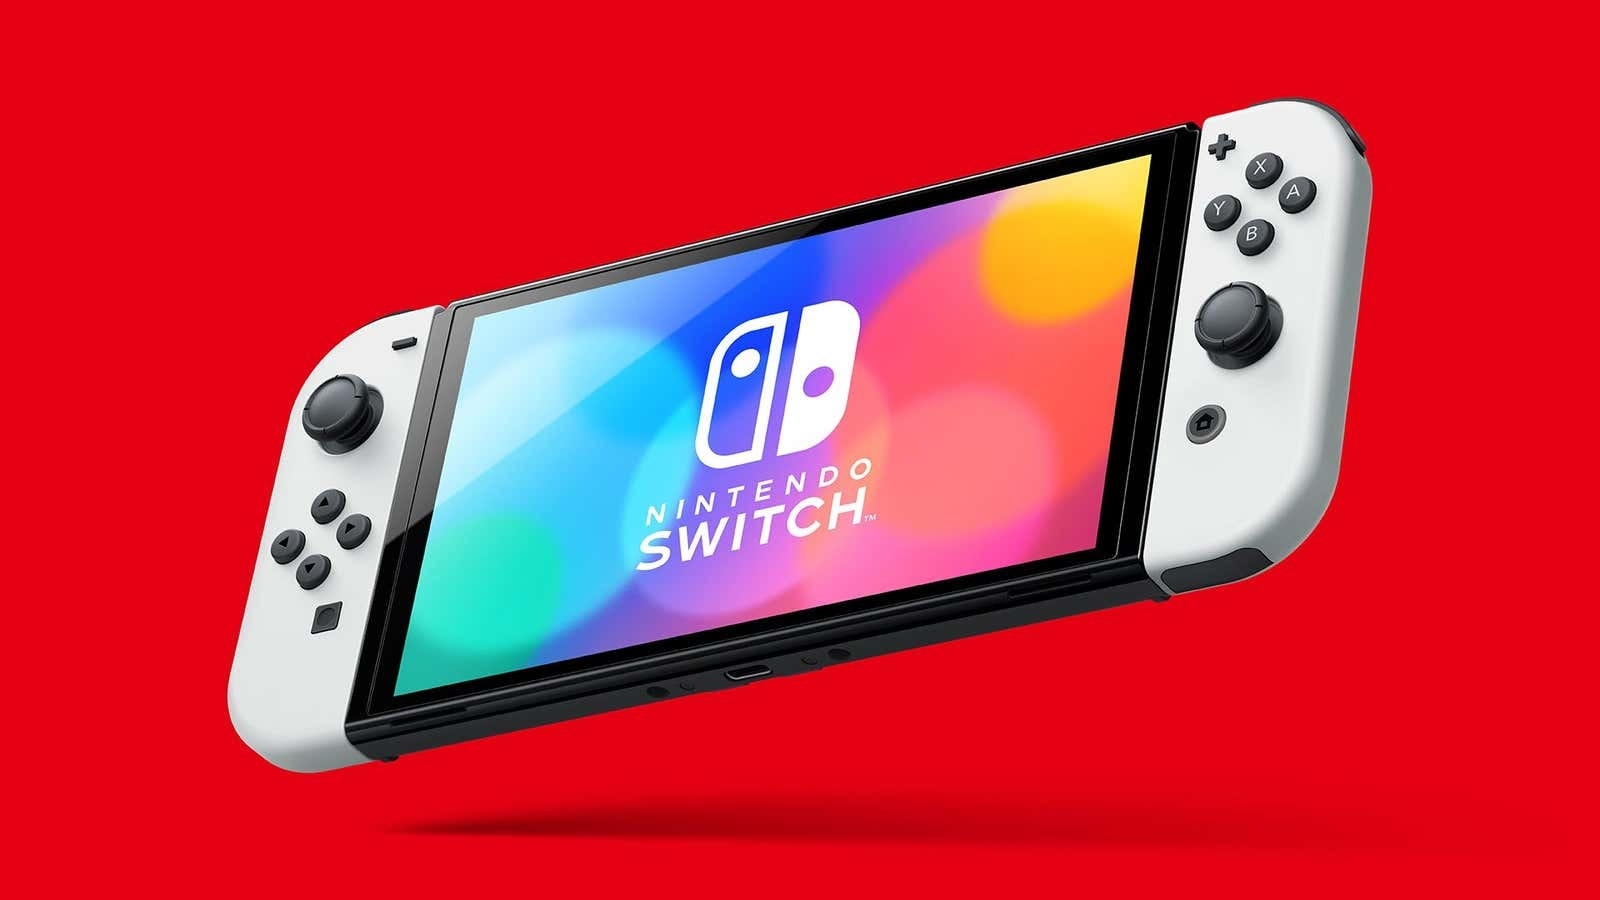 Her er den nye Nintendo Switch-konsollen - Gamer.no